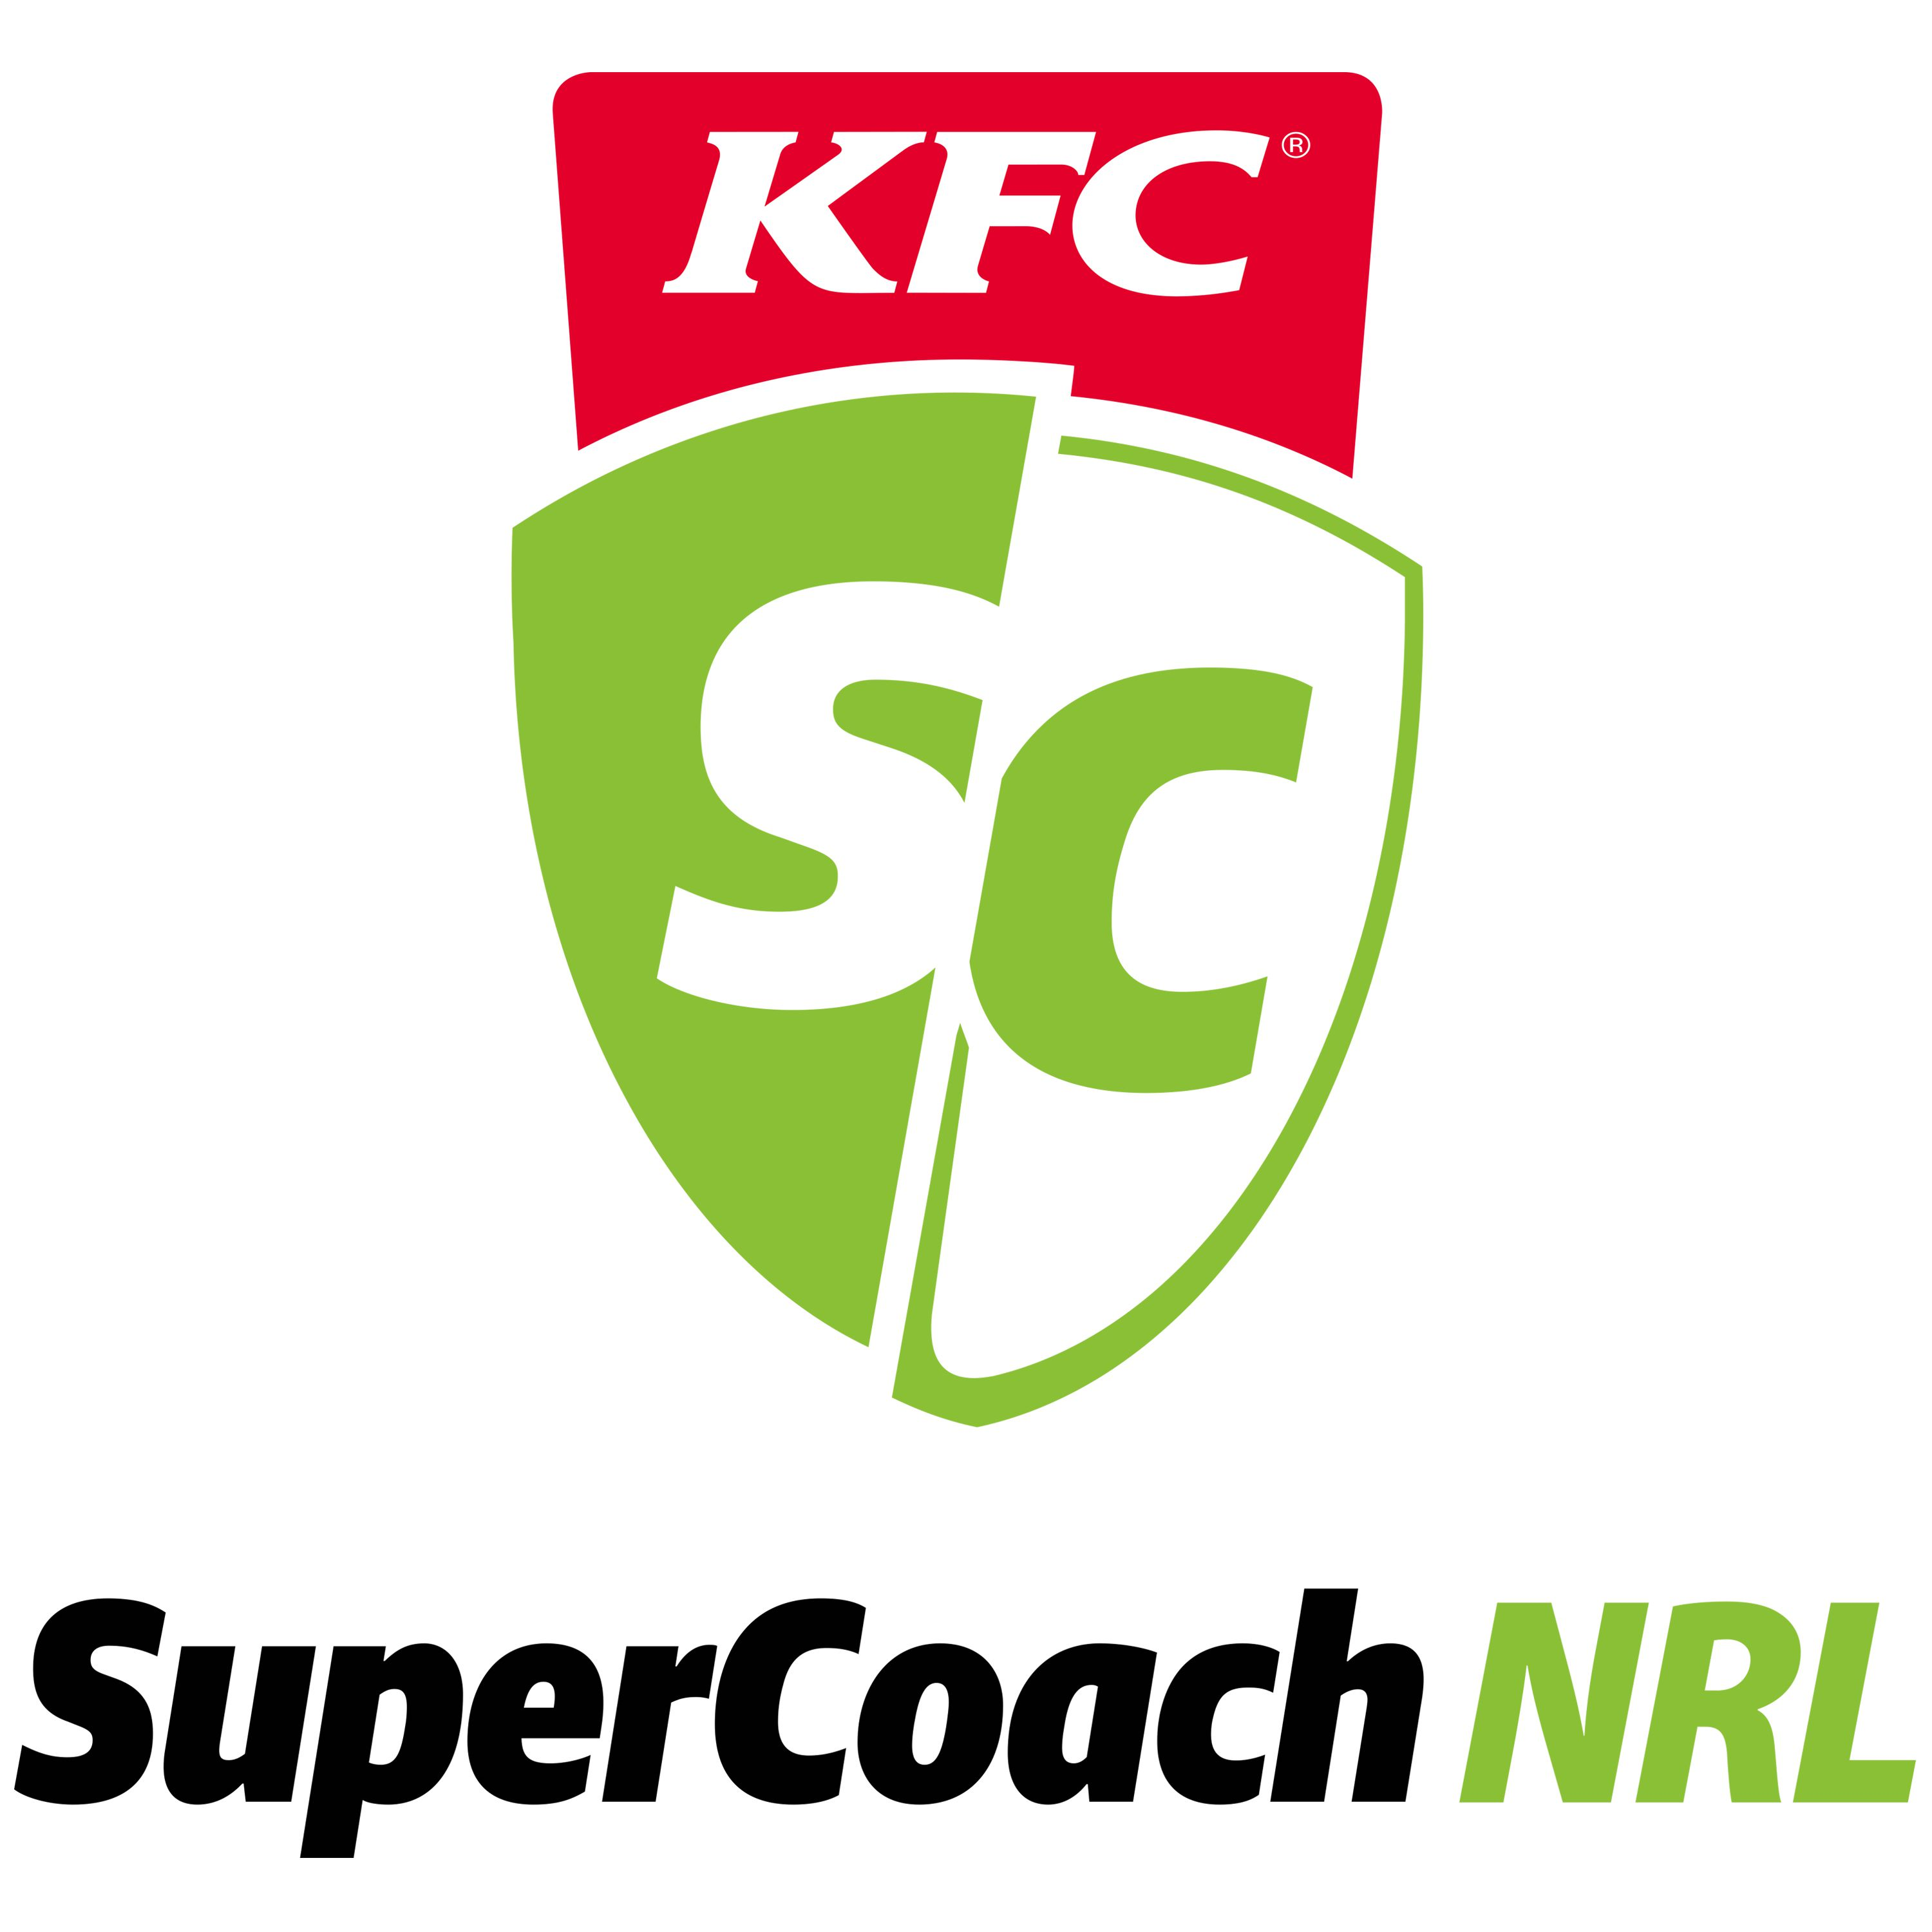 KFC SuperCoach podcast: Countdown Show Round 1